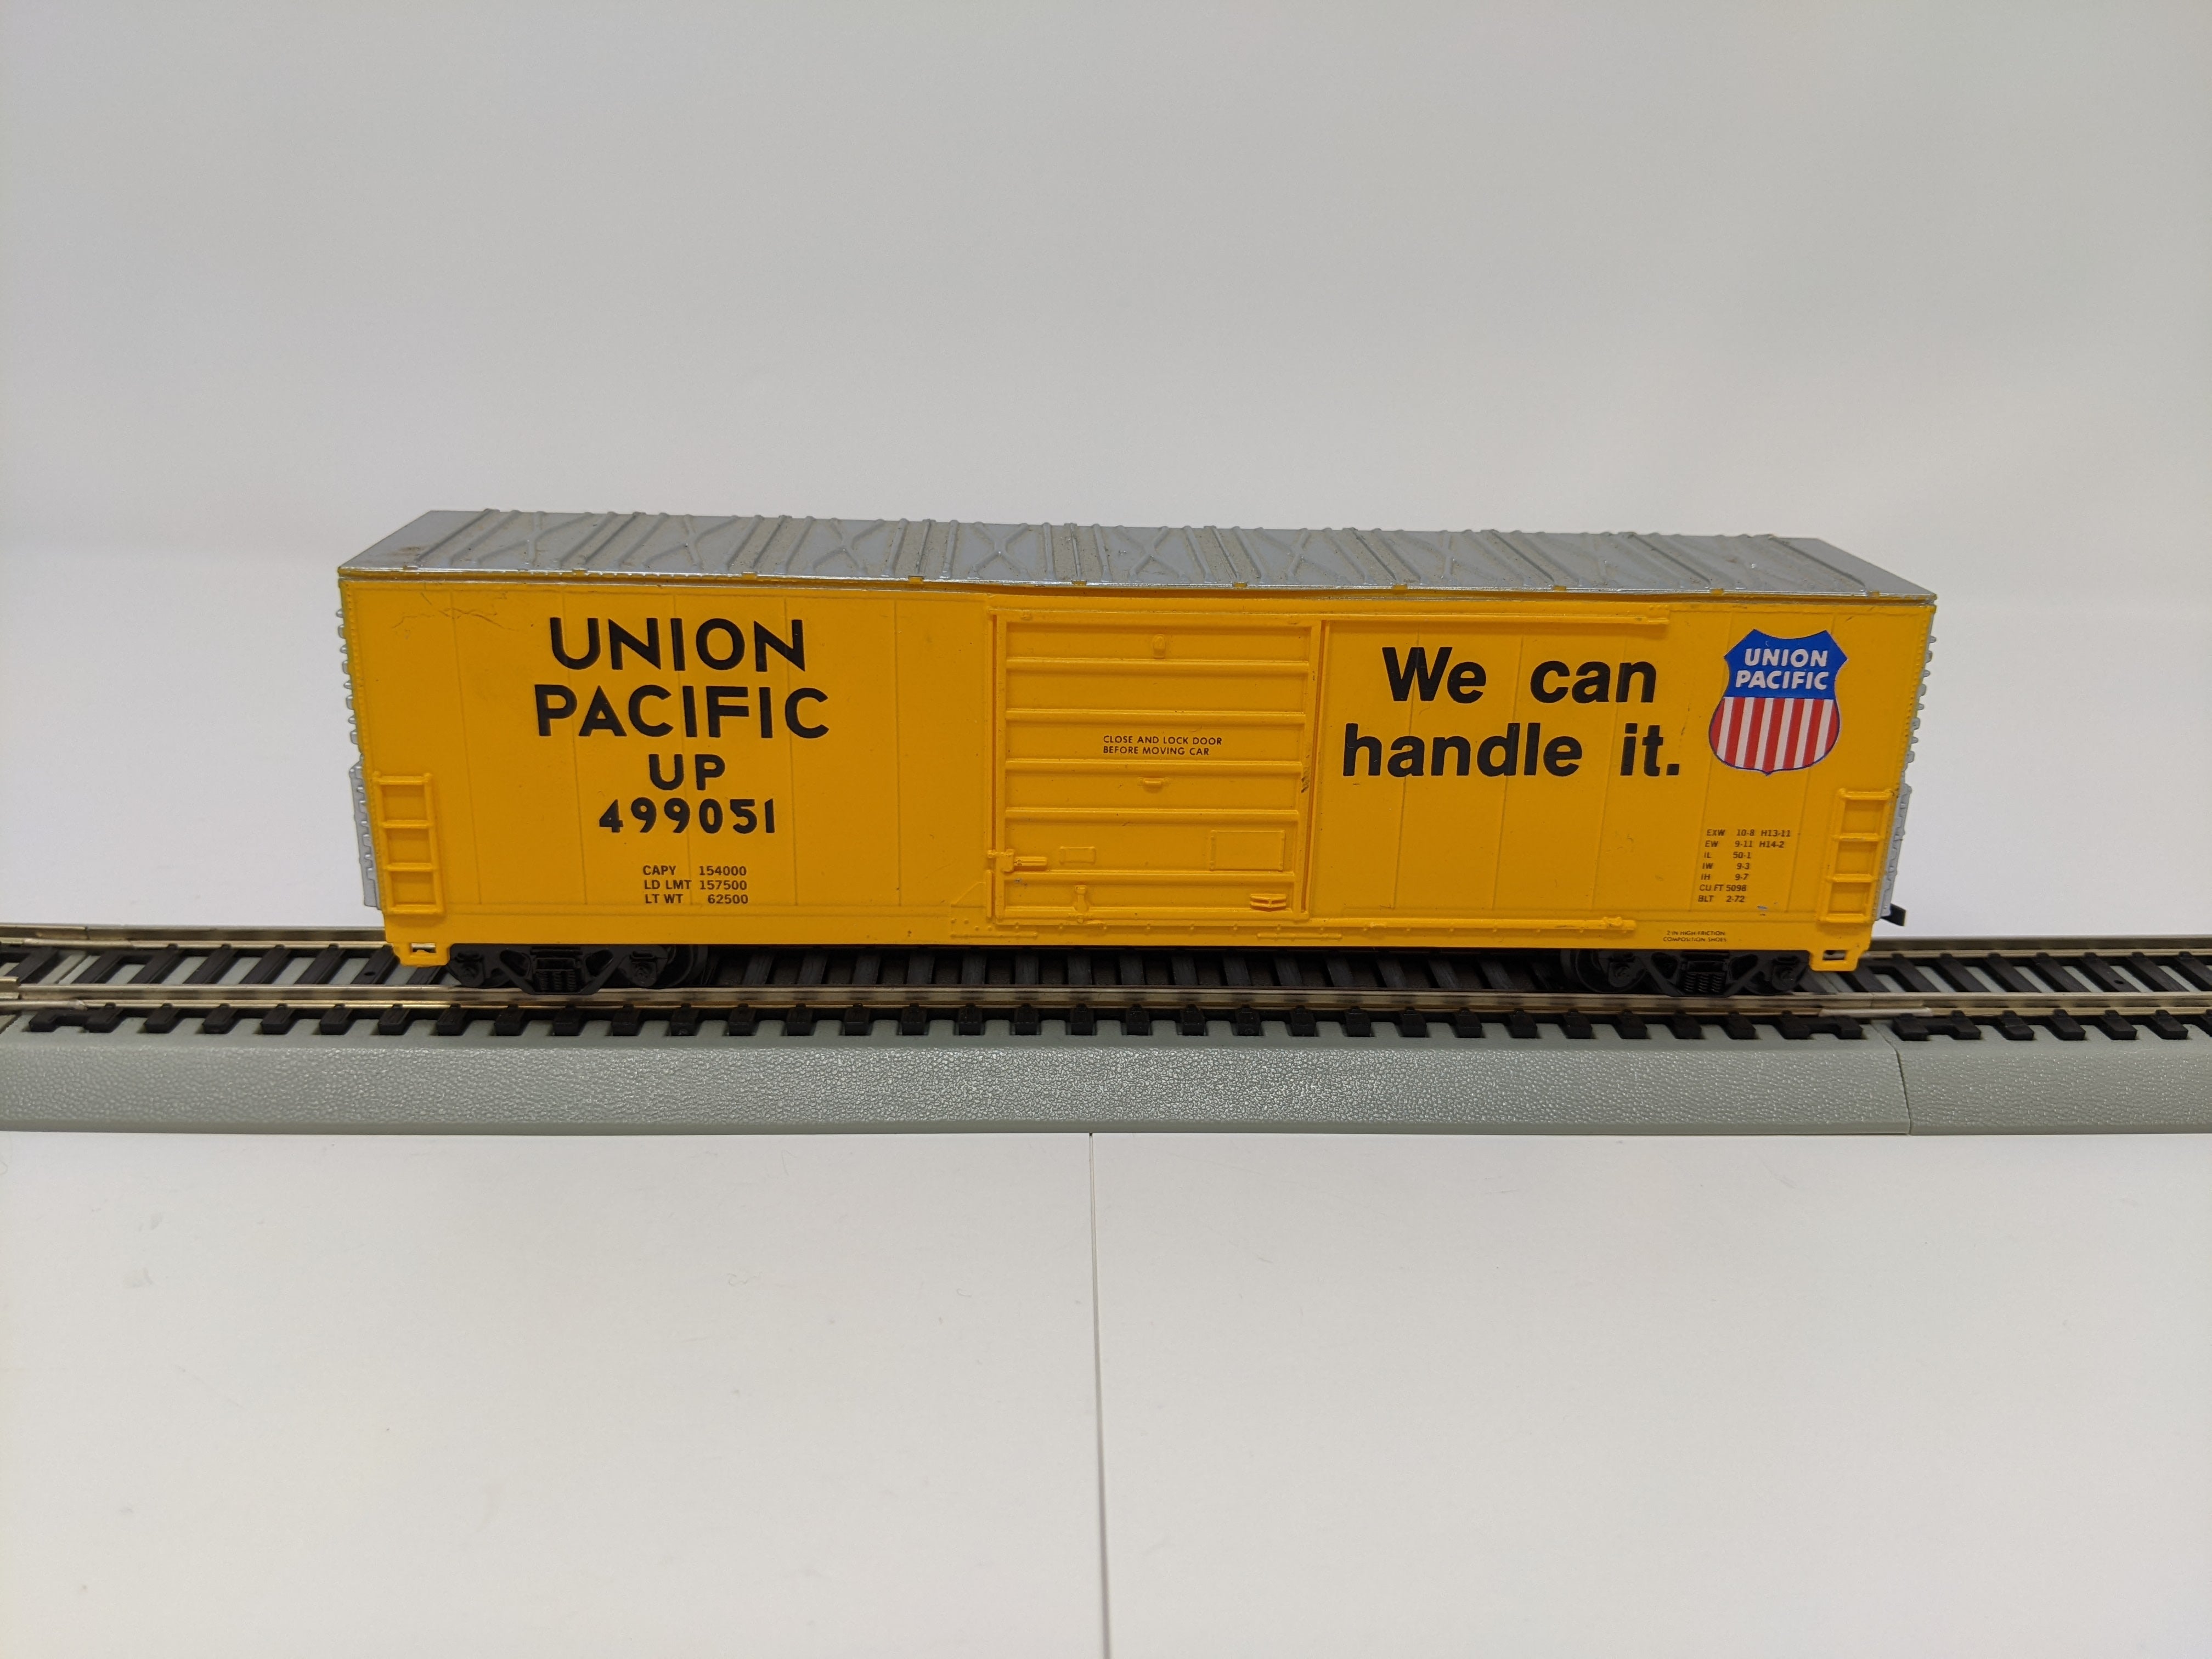 USED Life-Like HO Scale, 50' Box Car, Union Pacific UP #499051